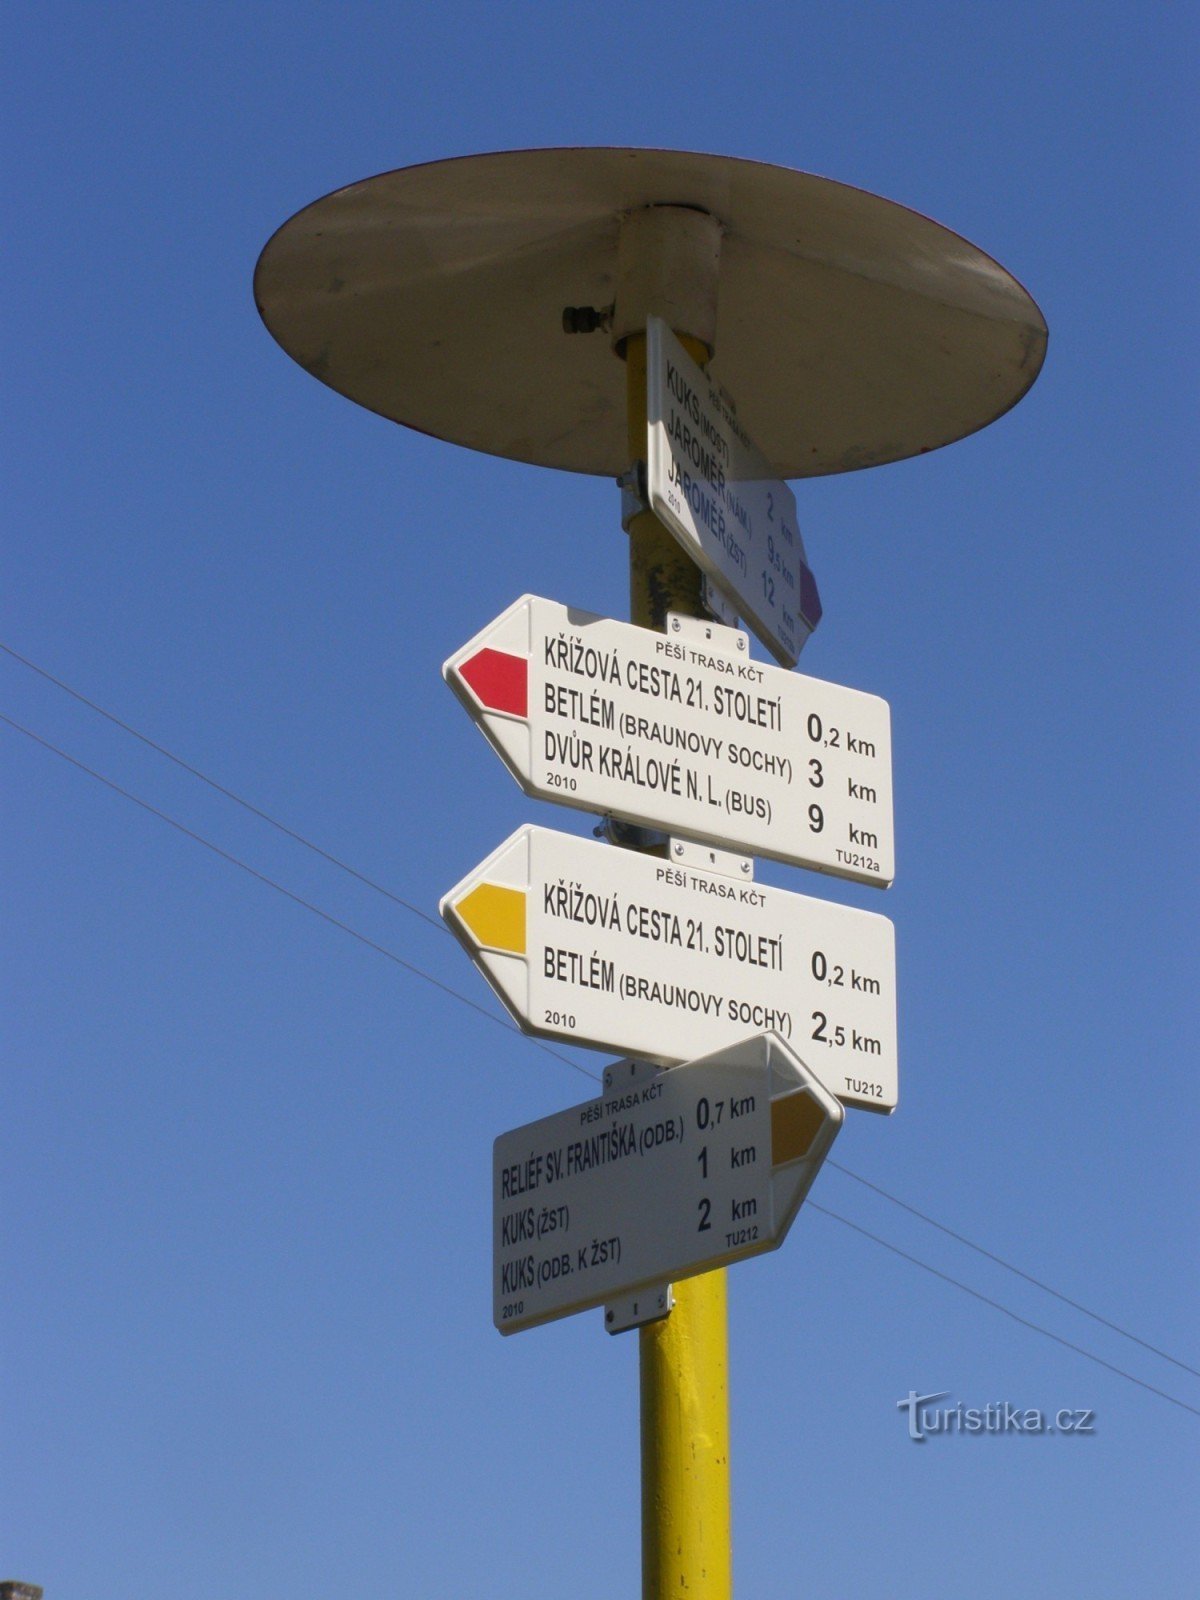 Stanovice 旅游十字路口 - 在 21 世纪的十字路口